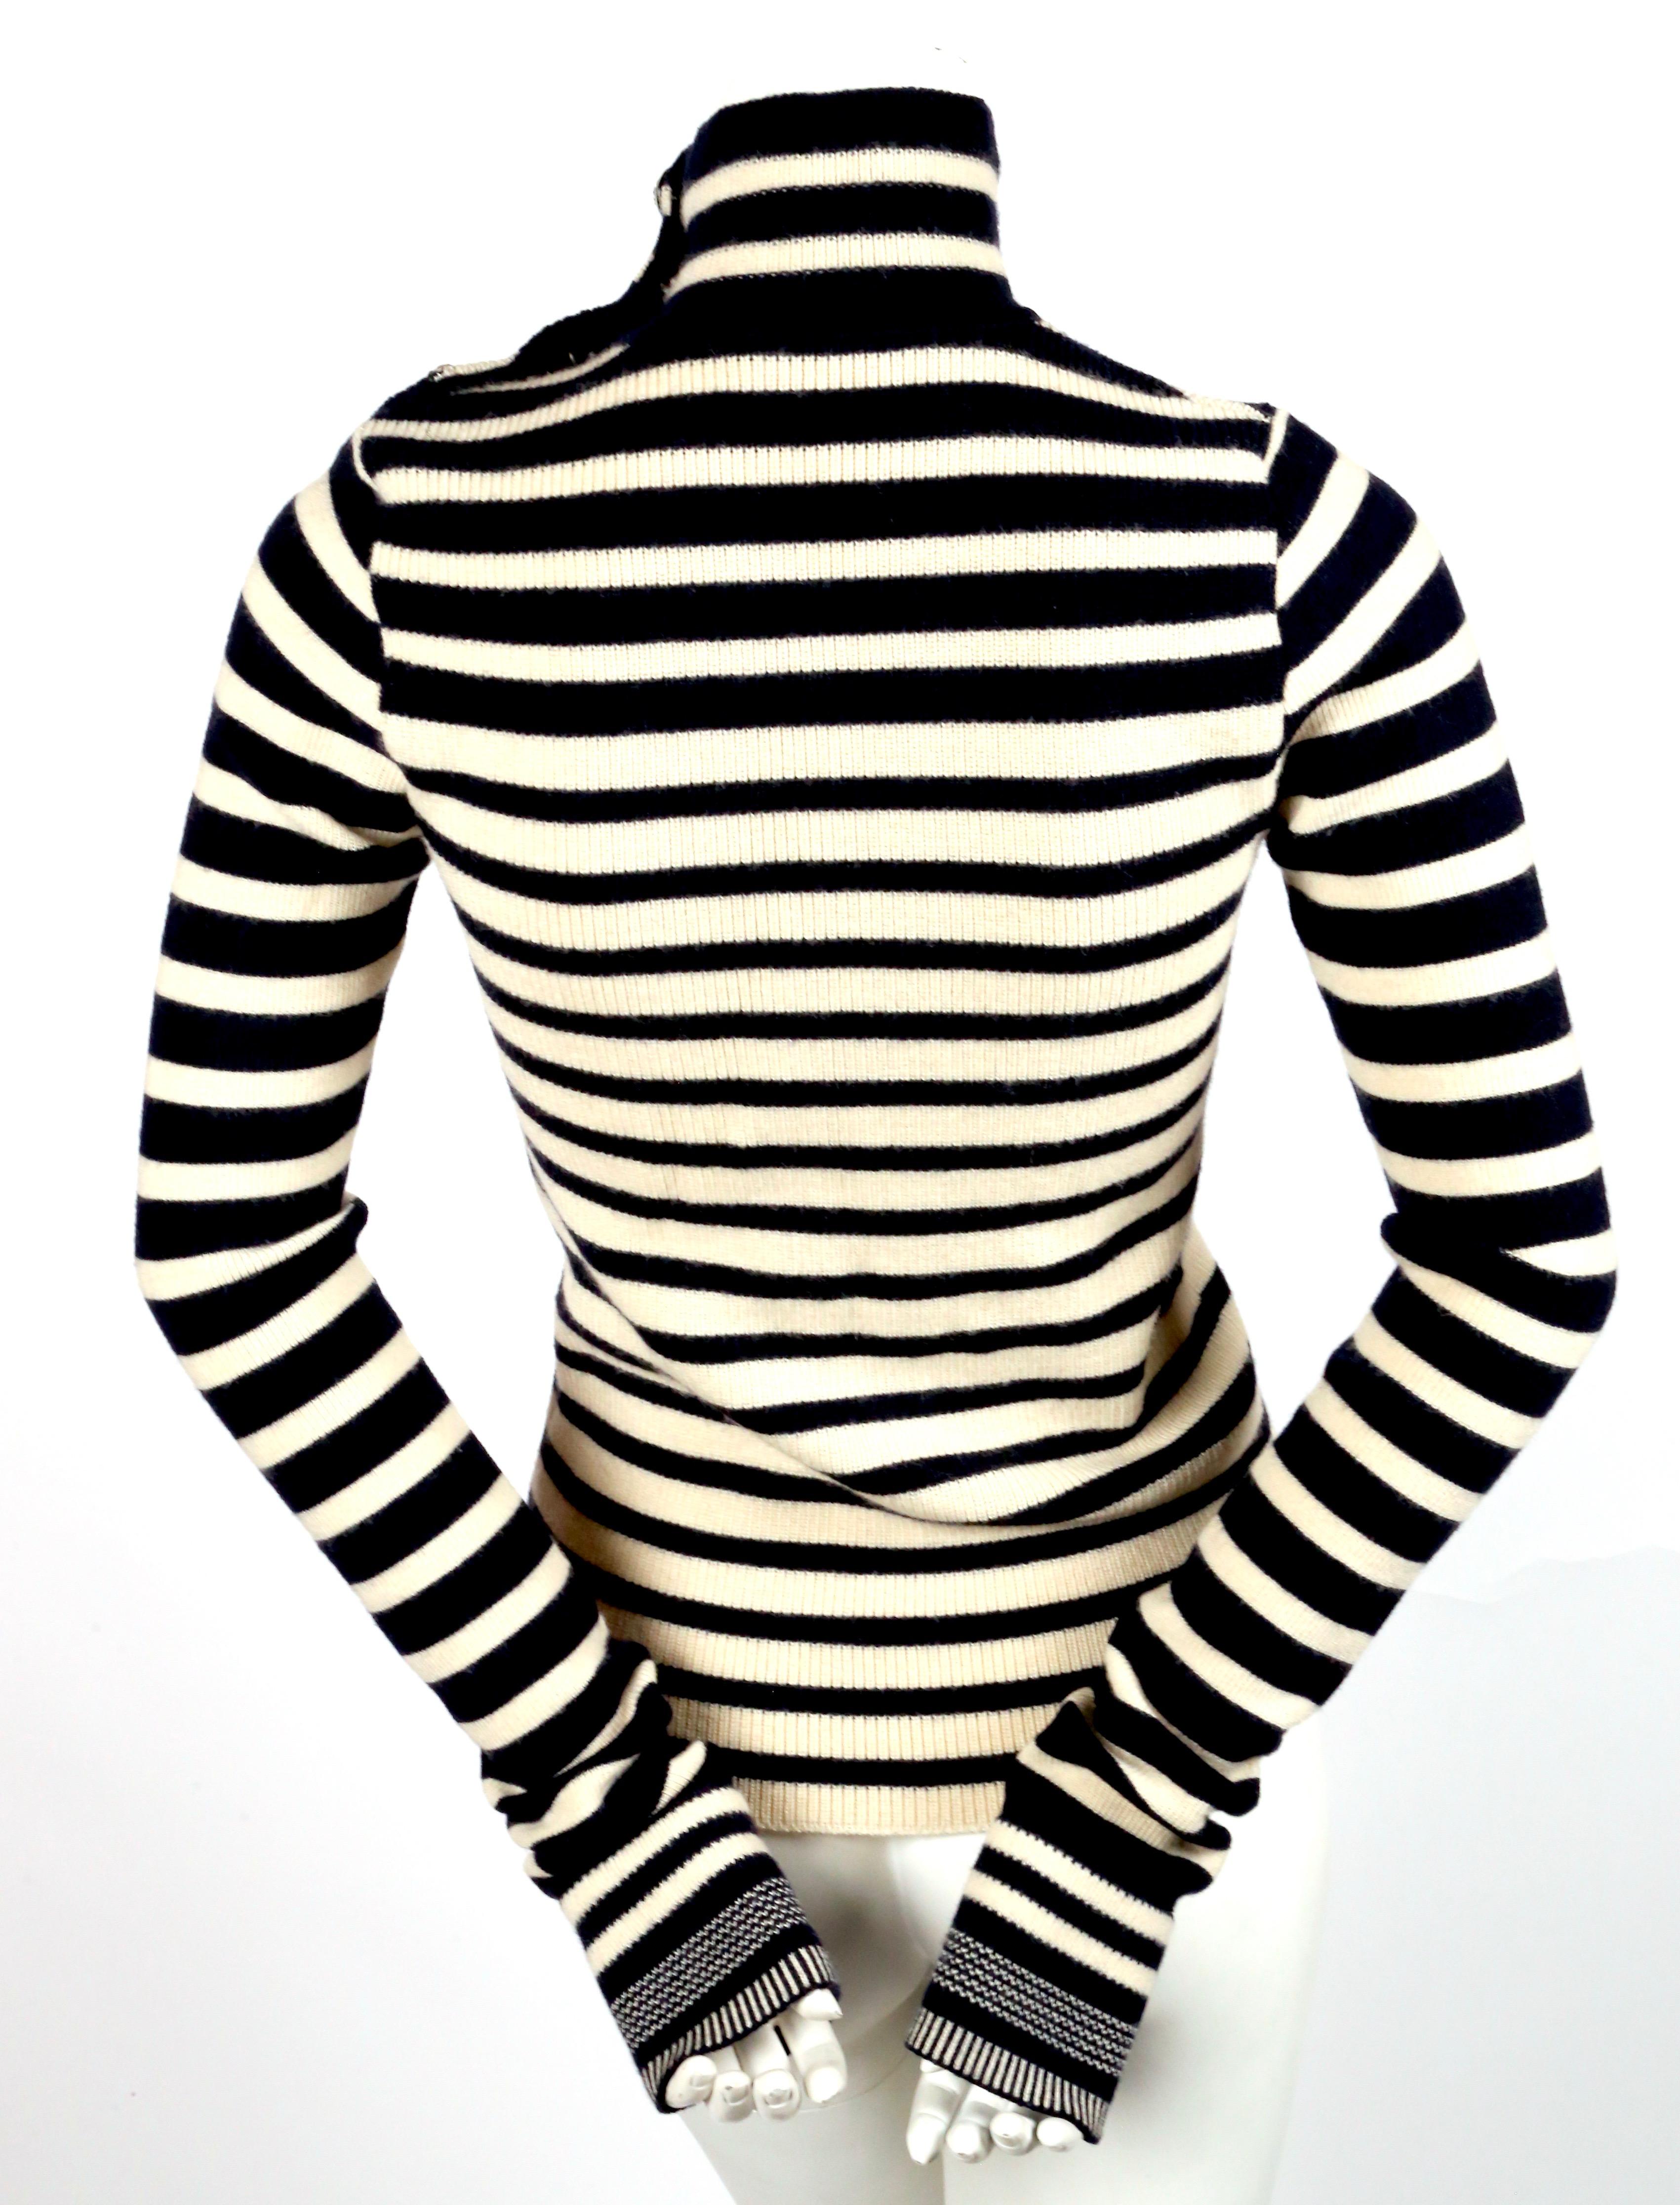 Beige 2007 BALENCIAGA by NICOLAS GHESQUIERE striped runway turtleneck sweater 